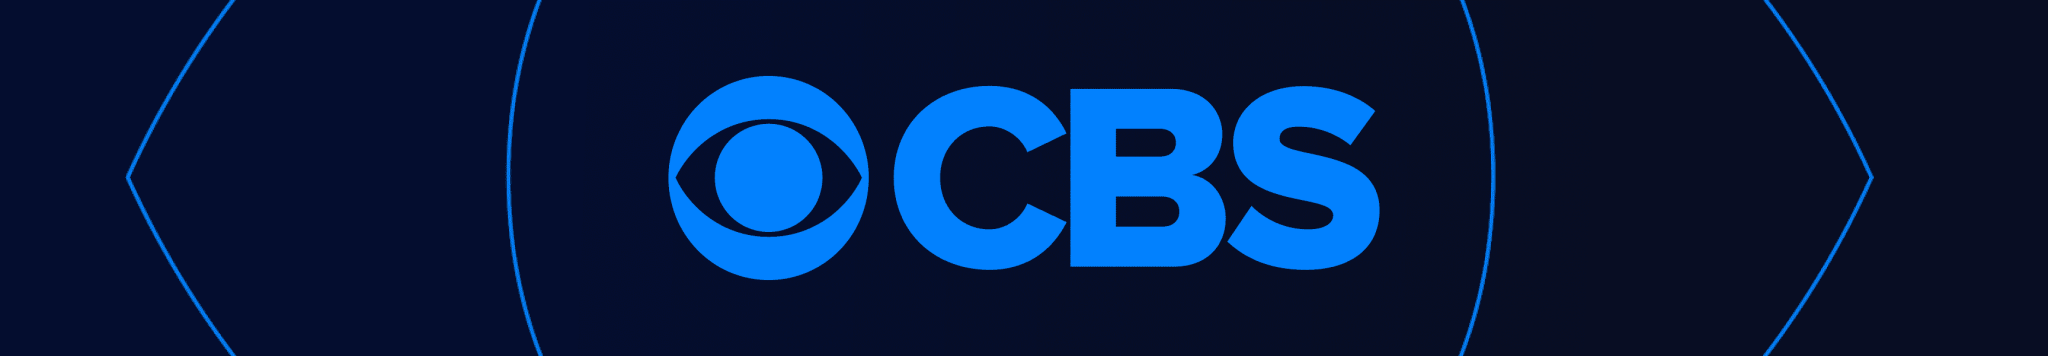 CBS Entertainment Outdoor